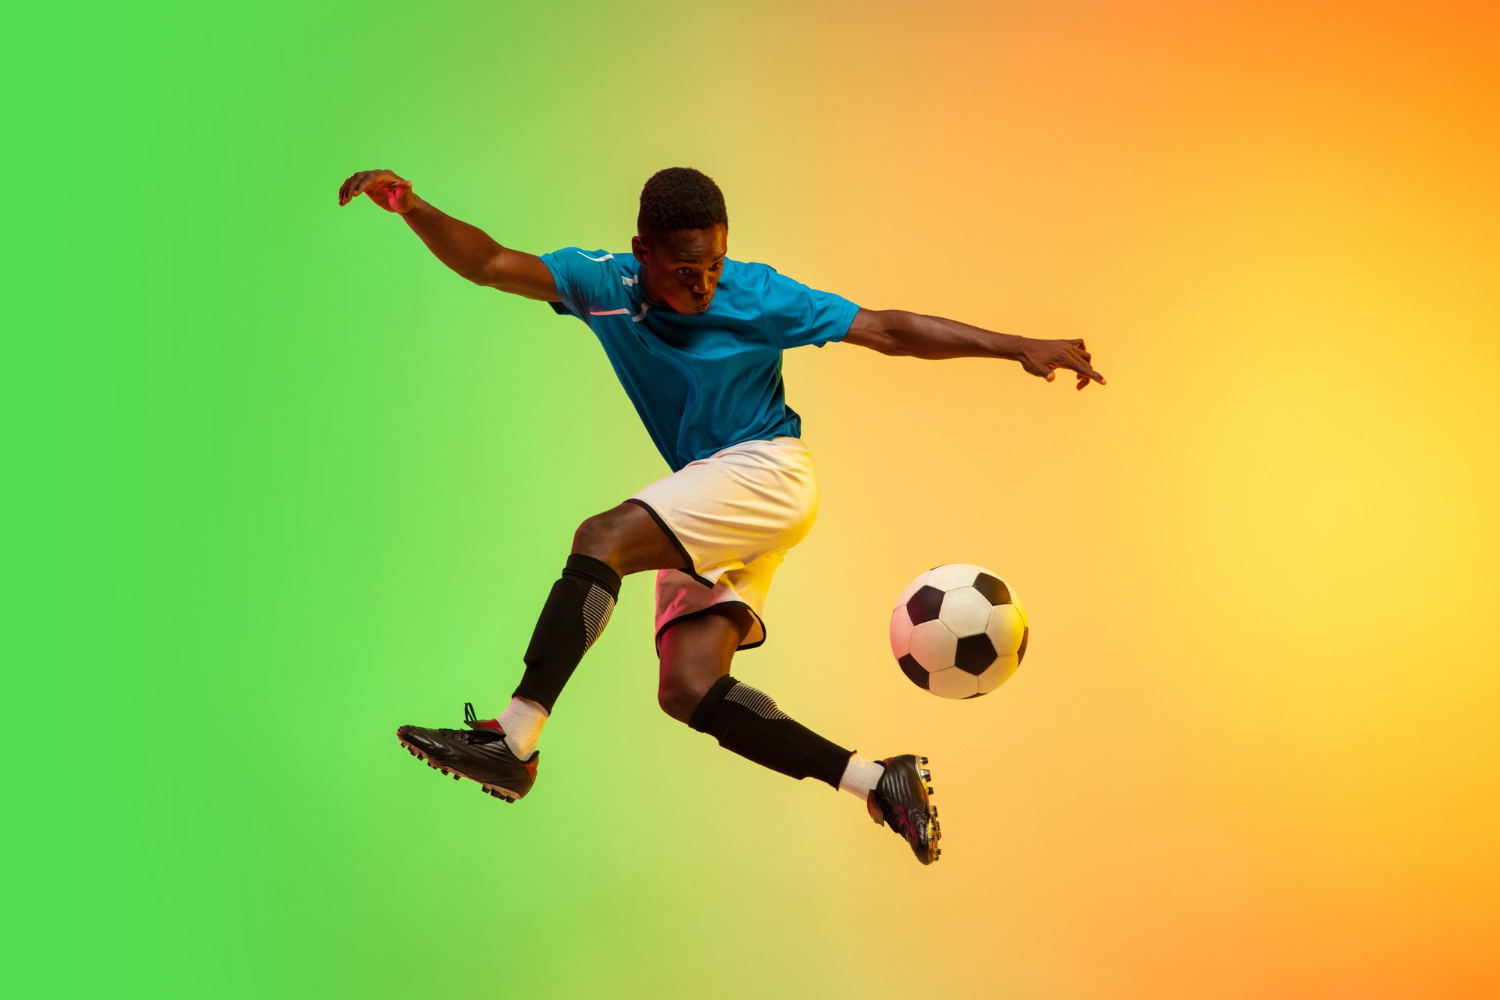 A football player kicking a ball in mid-air